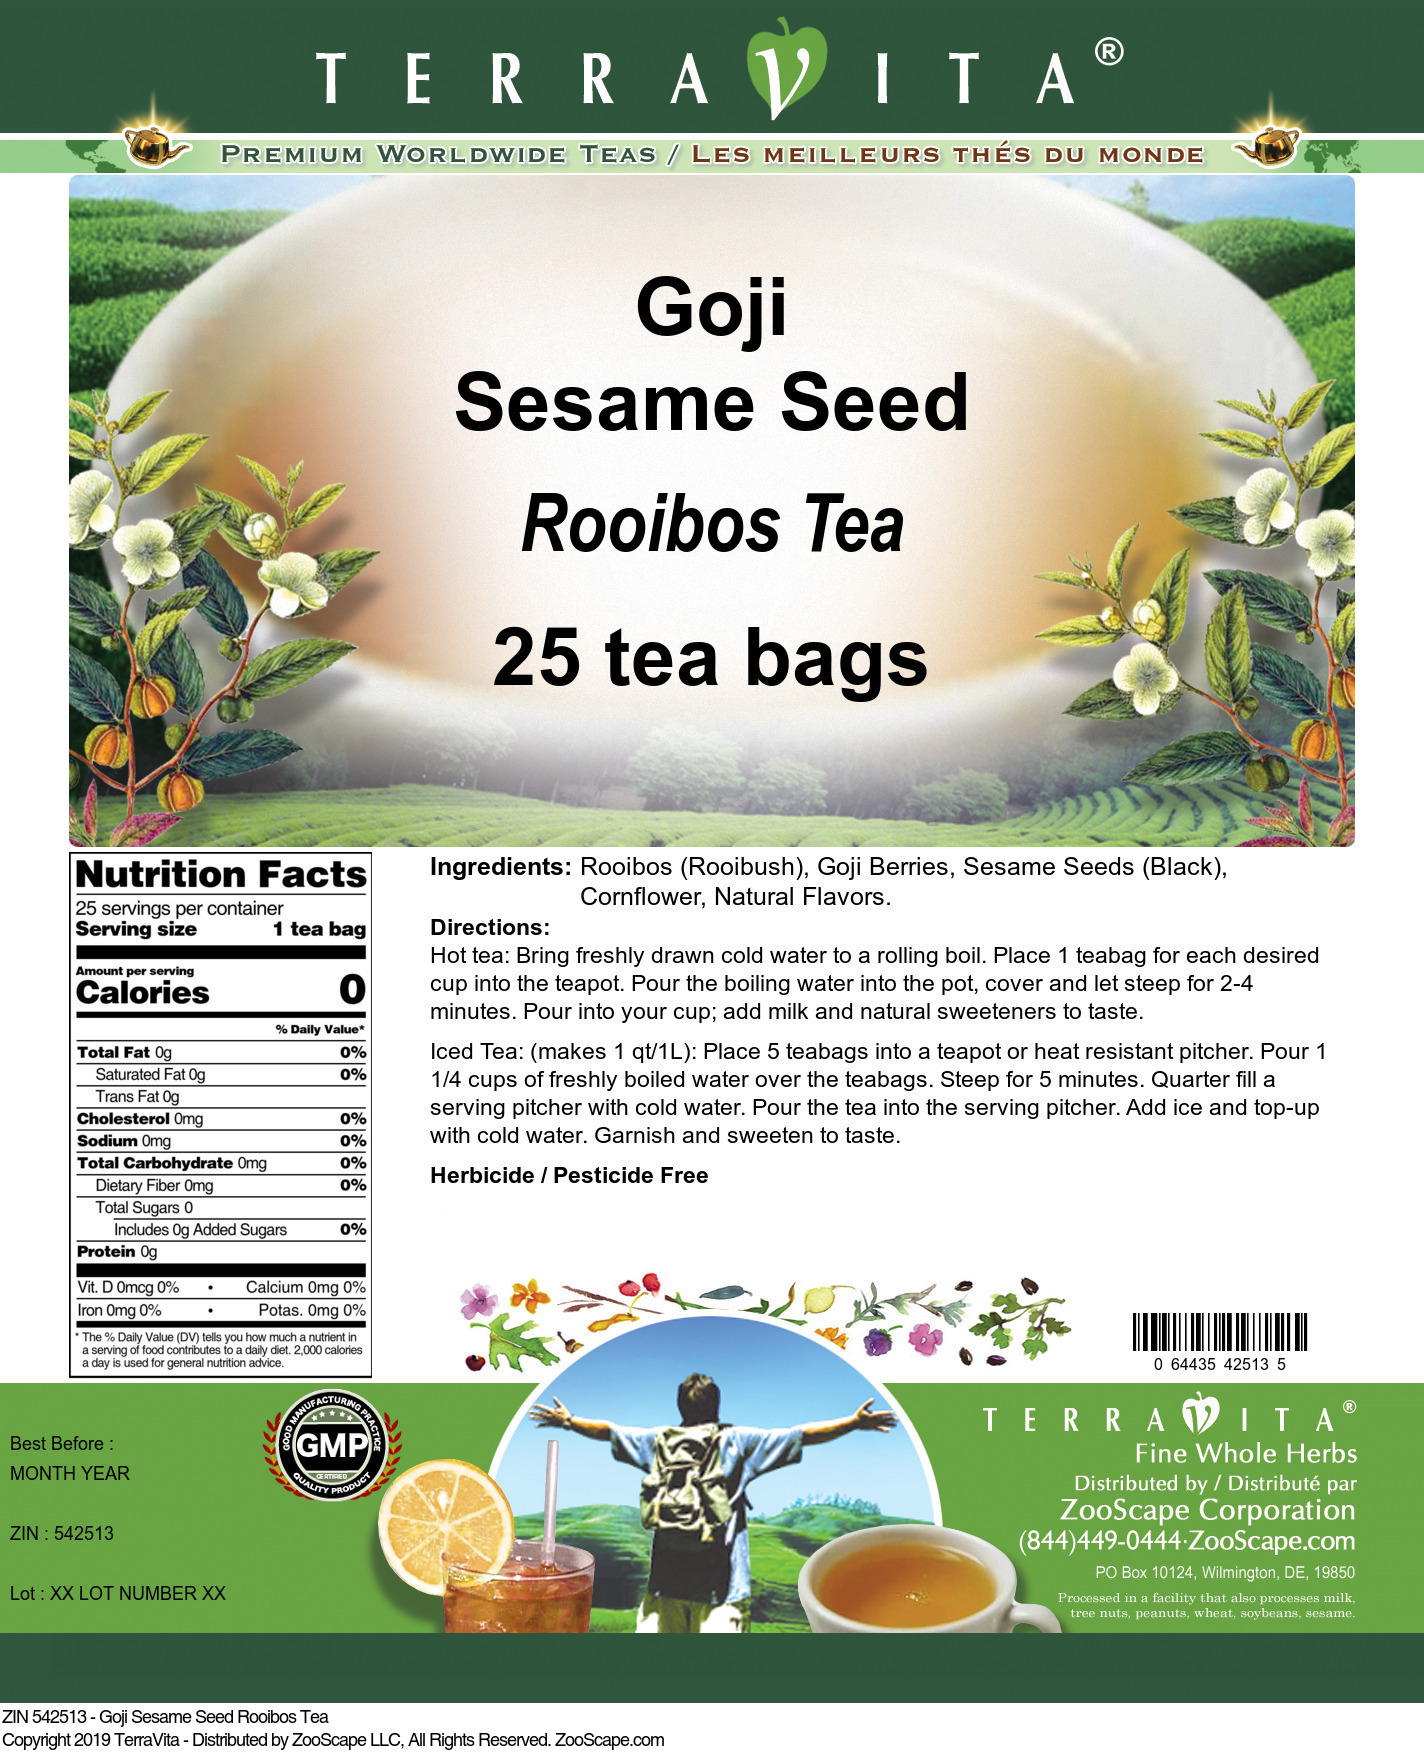 Goji Sesame Seed Rooibos Tea - Label